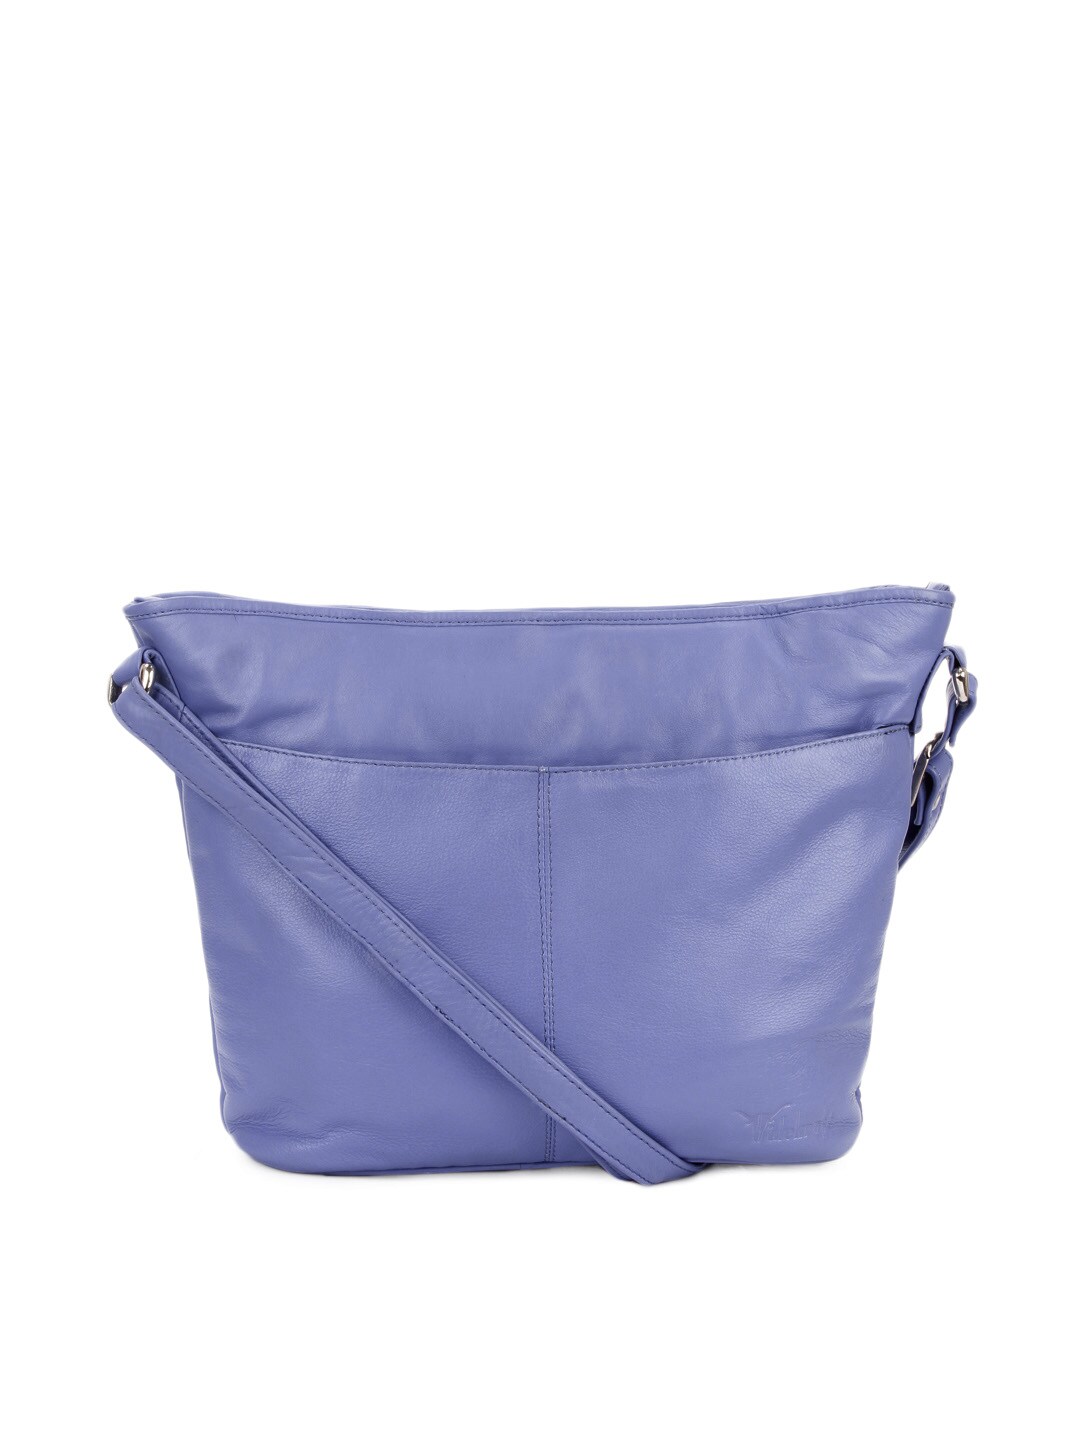 Hidekraft Women Purple Handbag